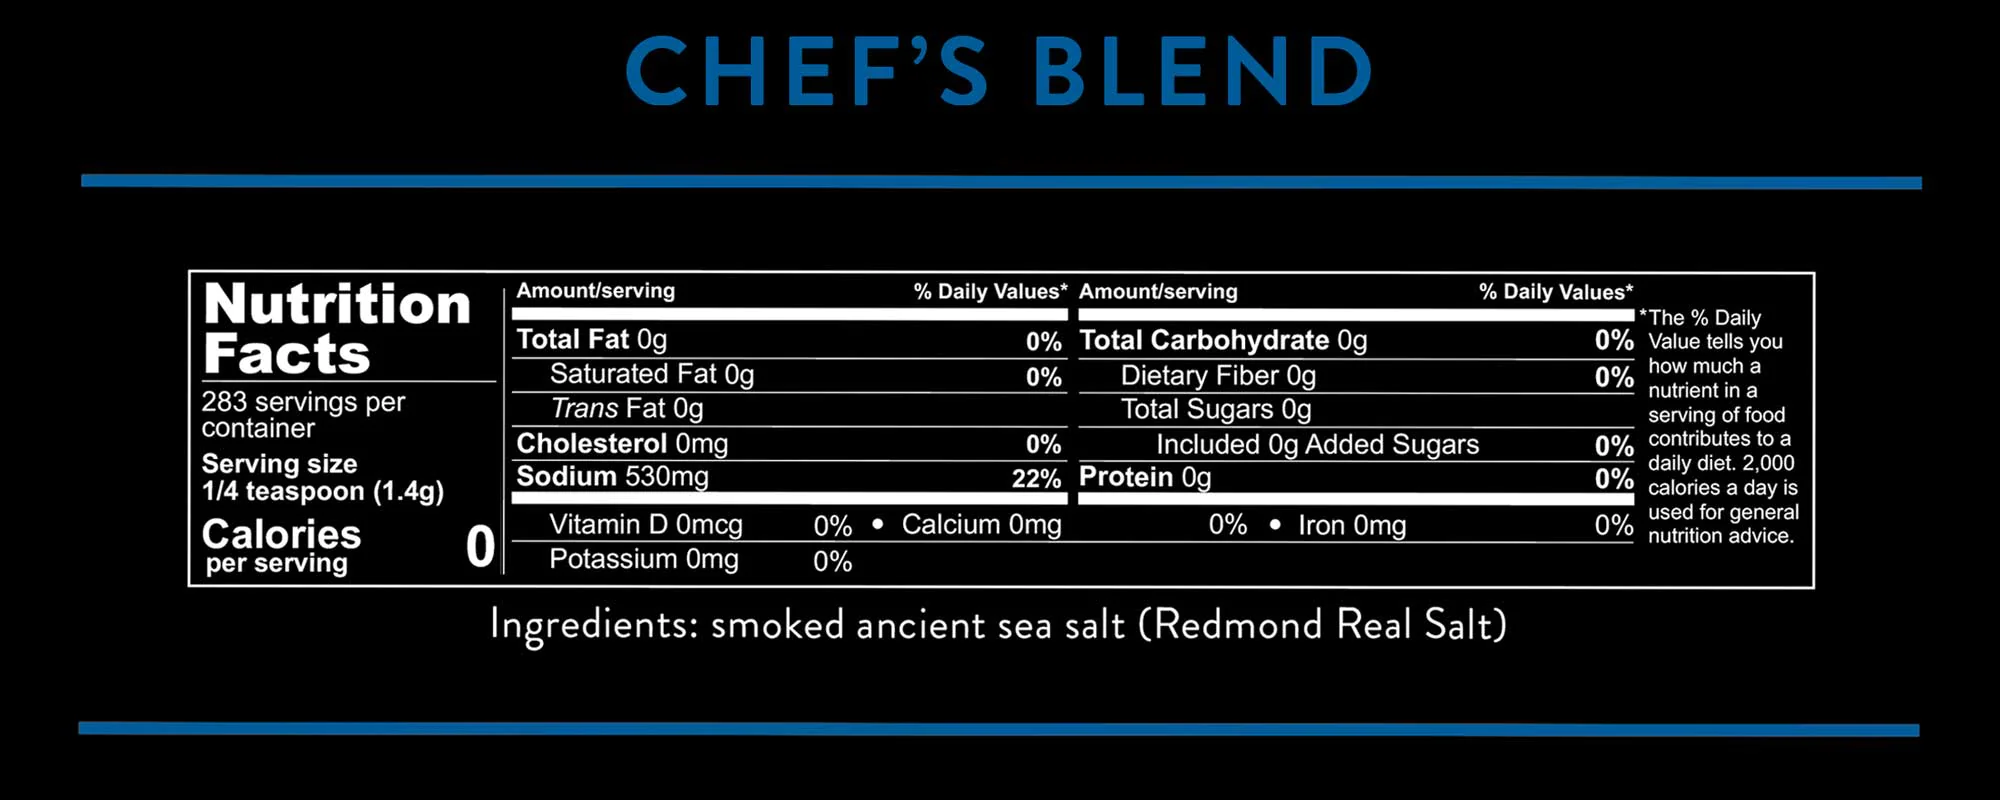 Chef's Blend ingredients: smoked ancient sea salt (Redmond Real Salt).